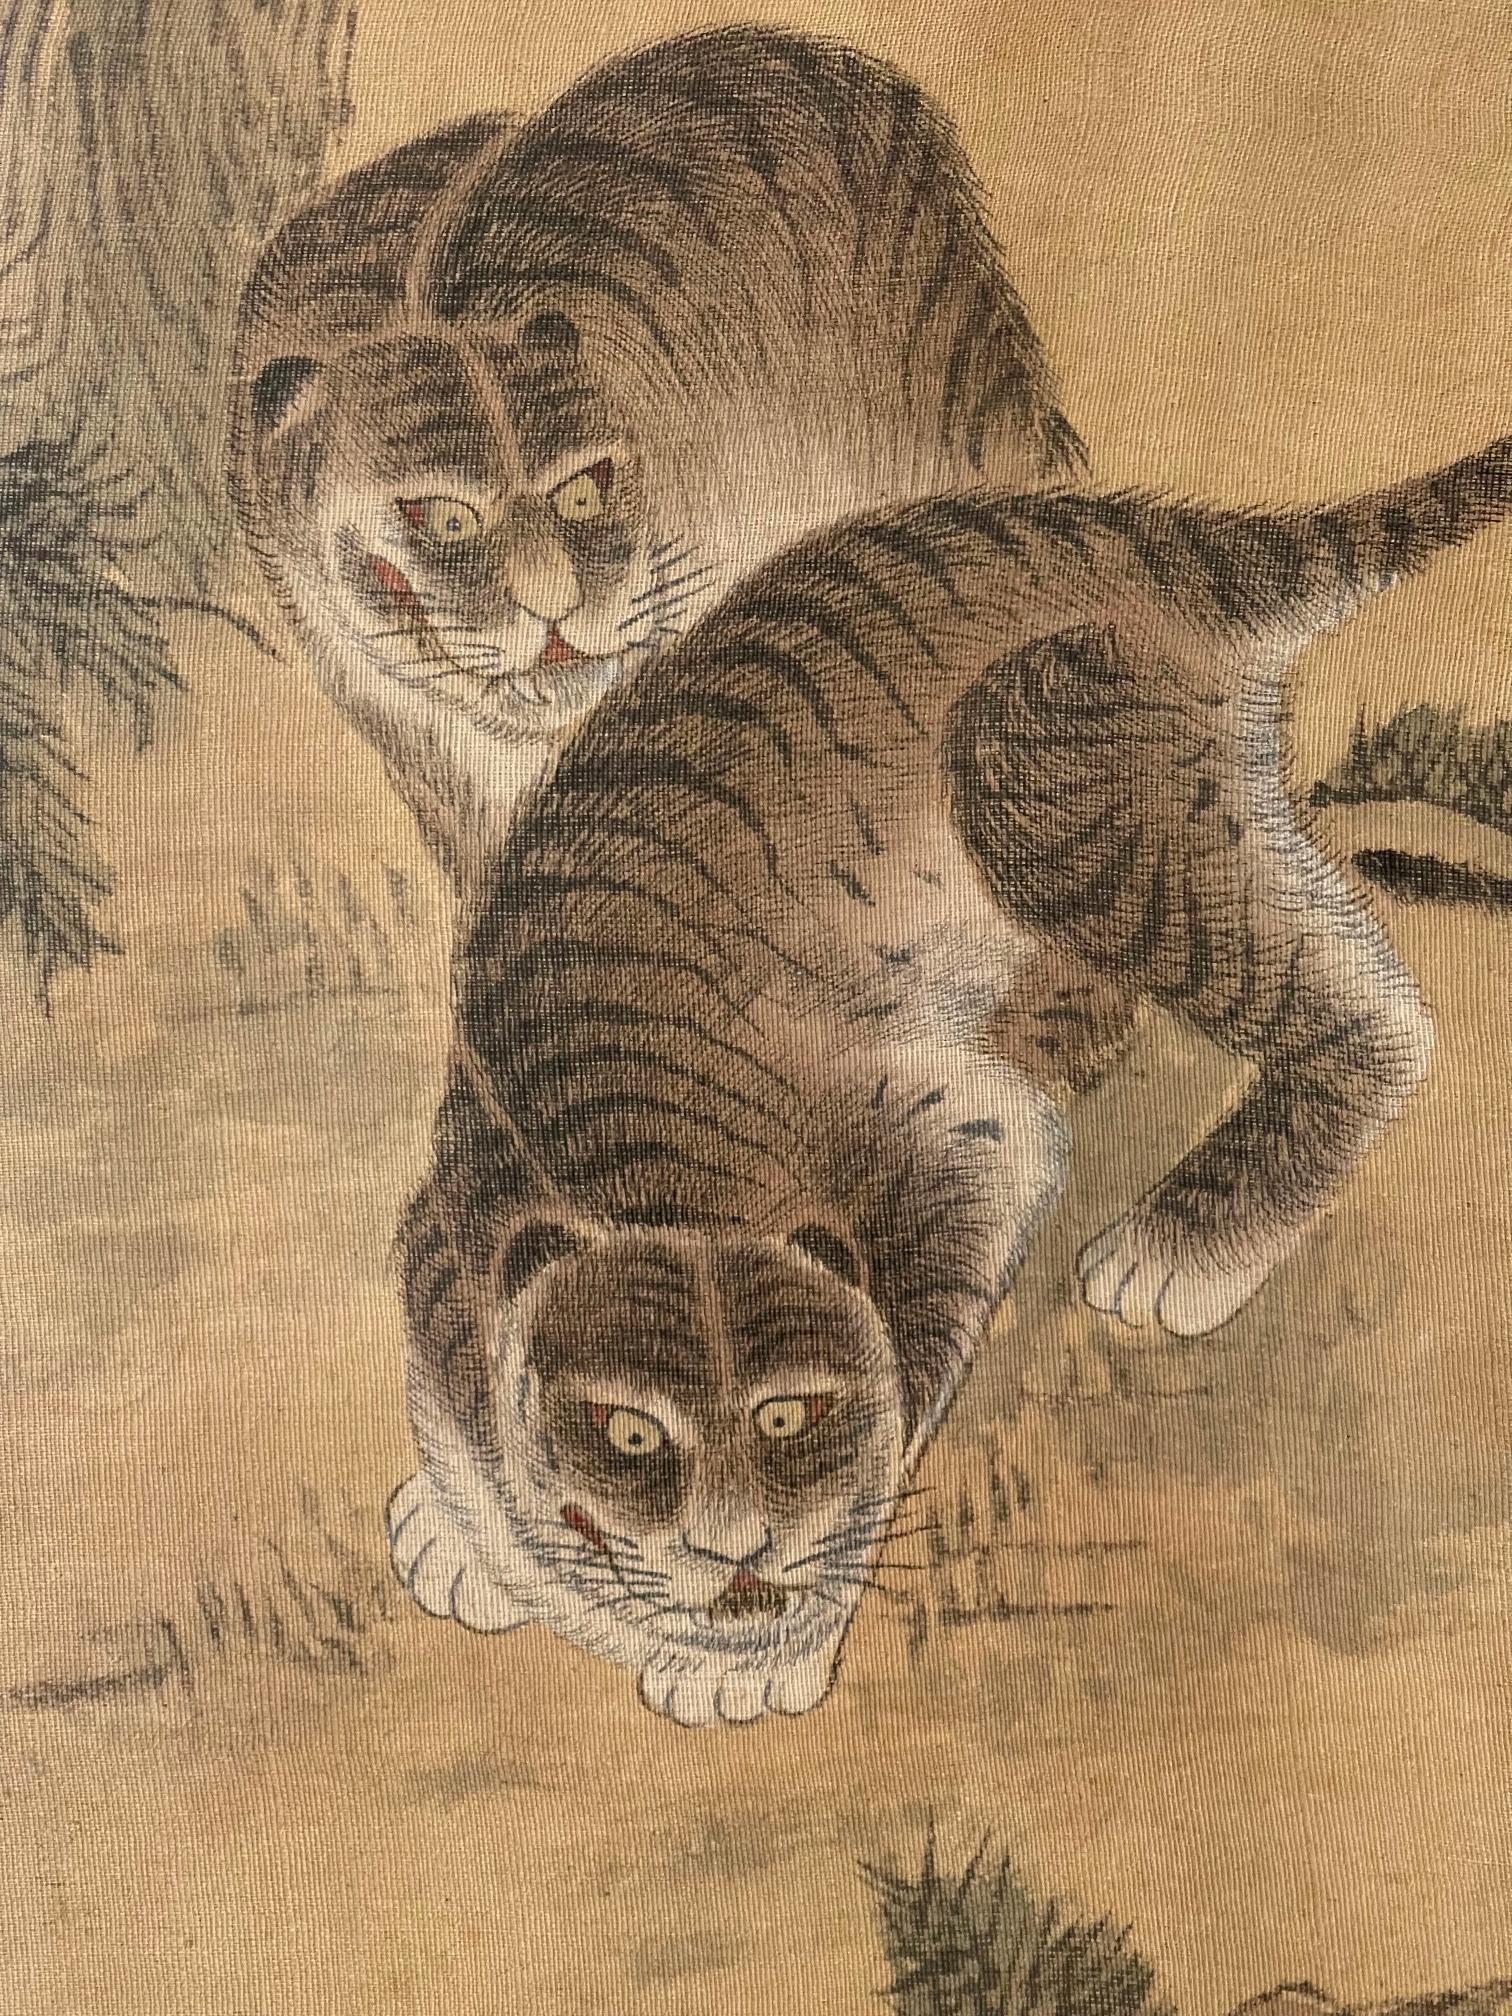 korean tiger paintings